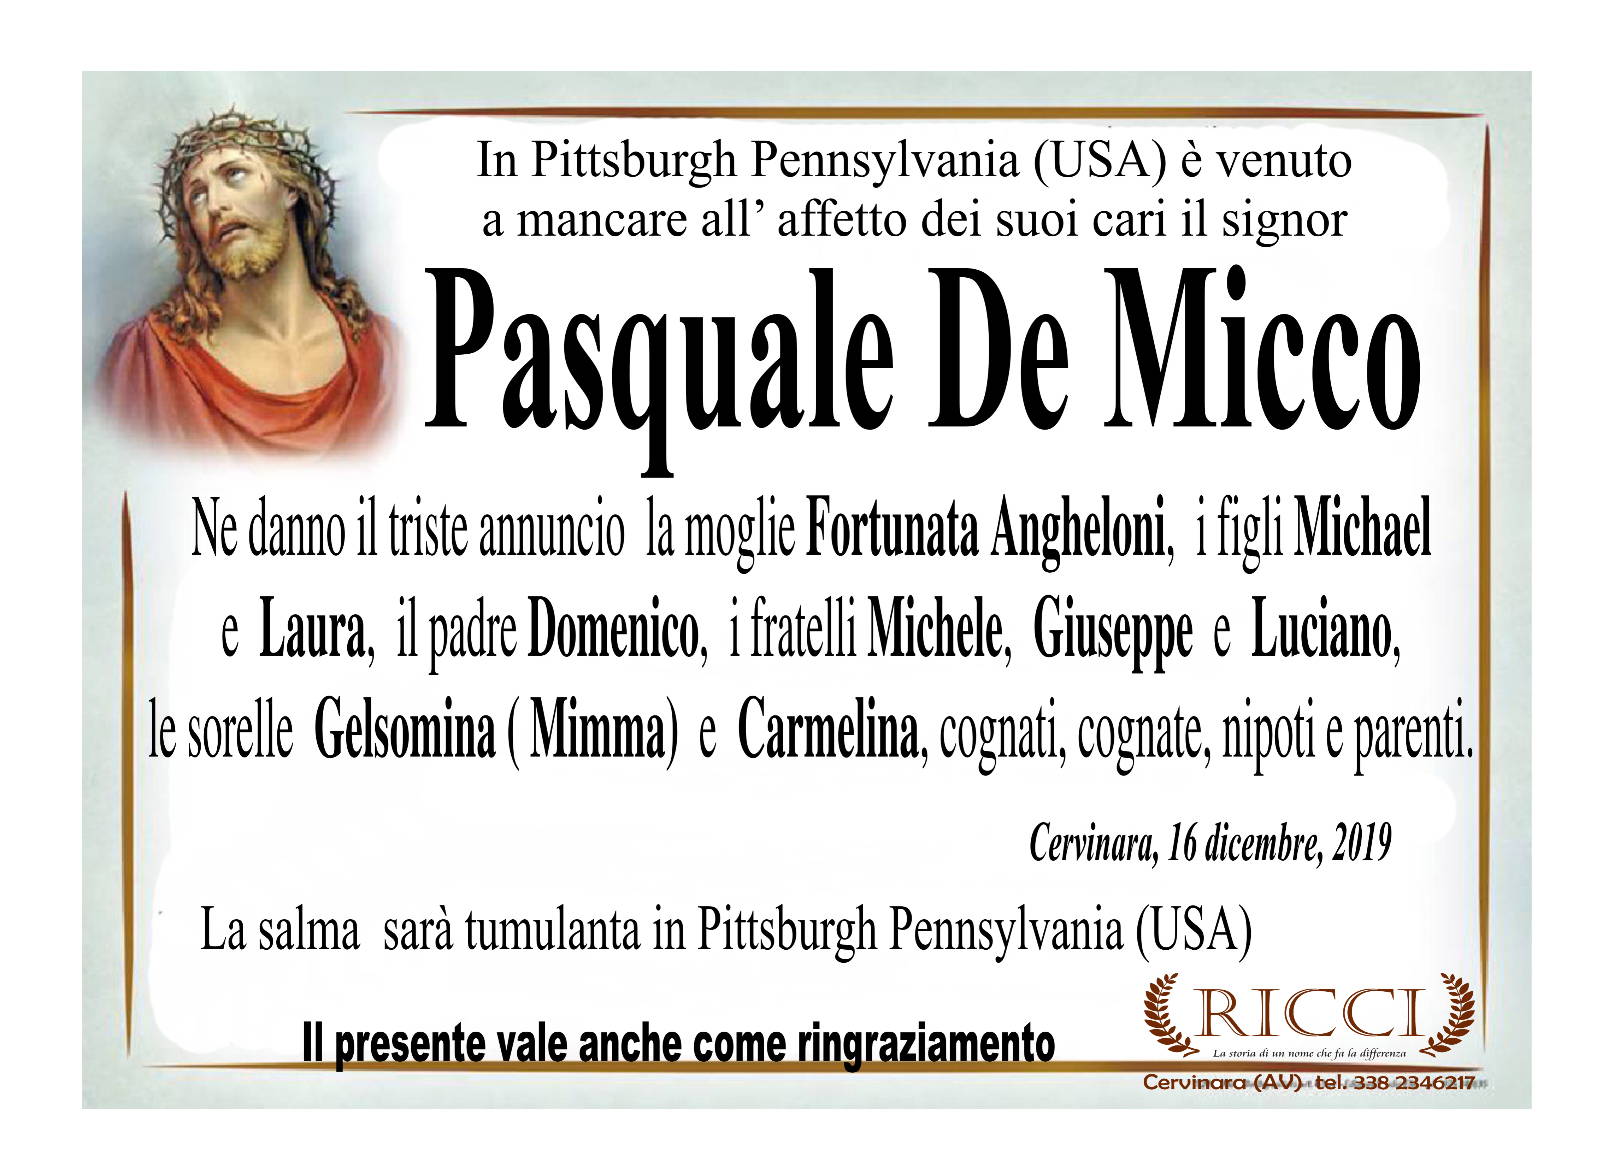 Pasquale De Micco